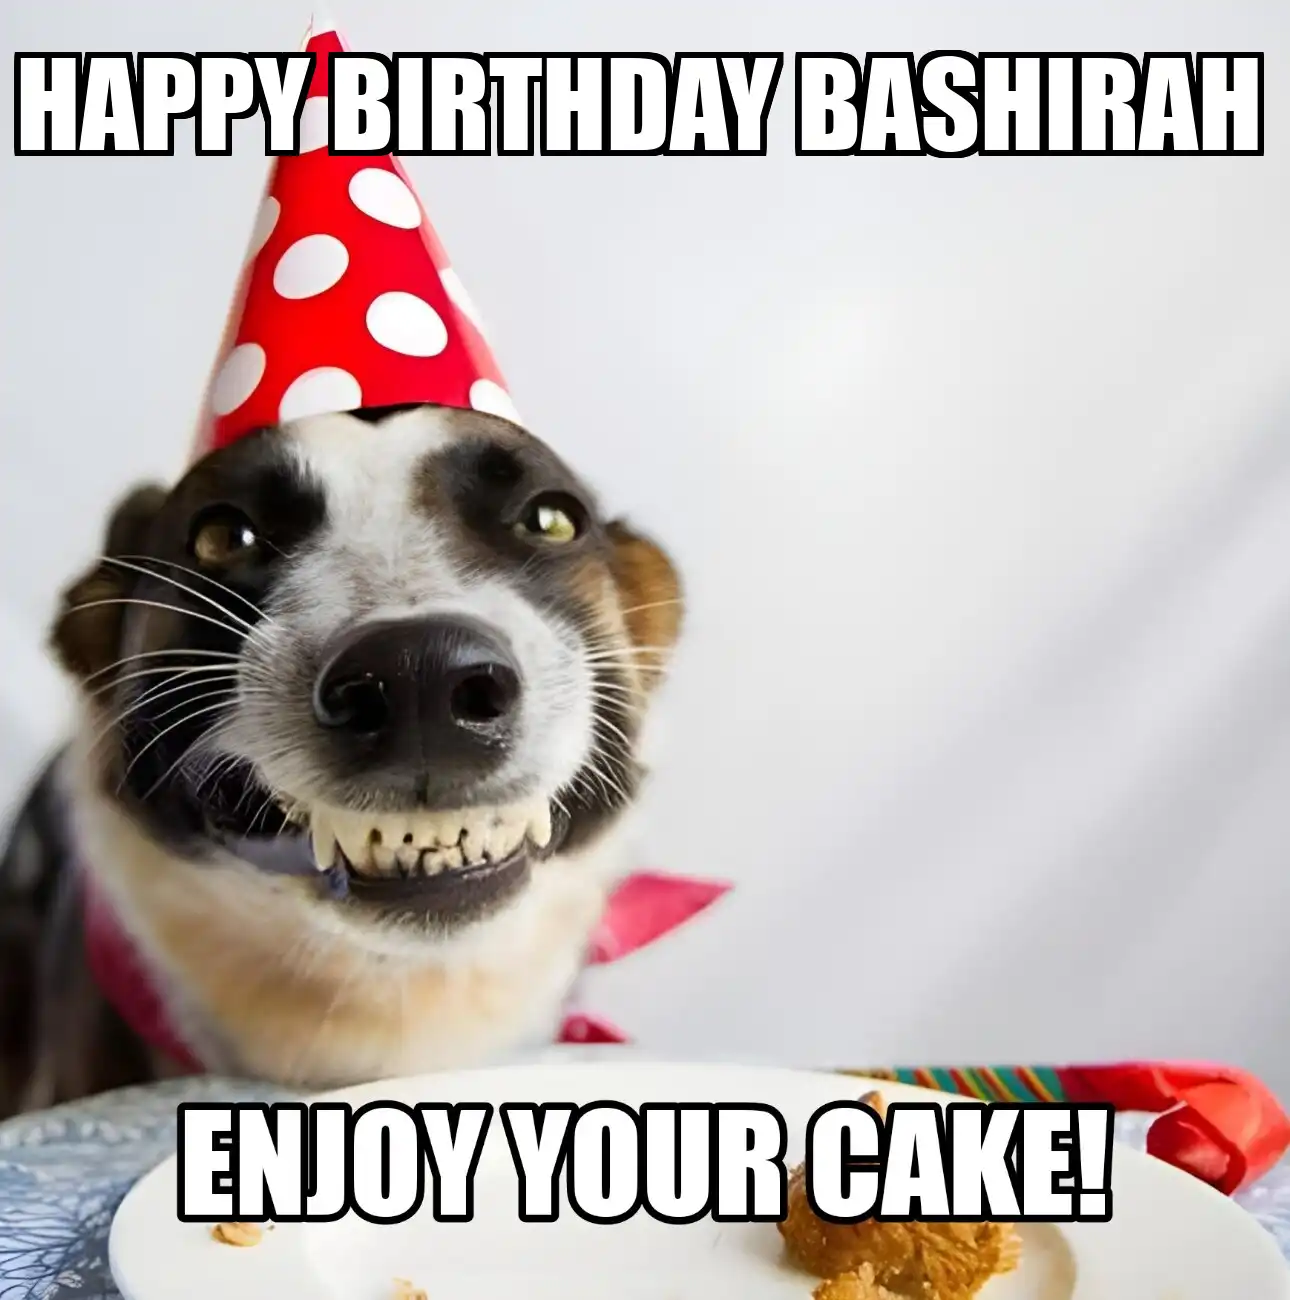 Happy Birthday Bashirah Enjoy Your Cake Dog Meme